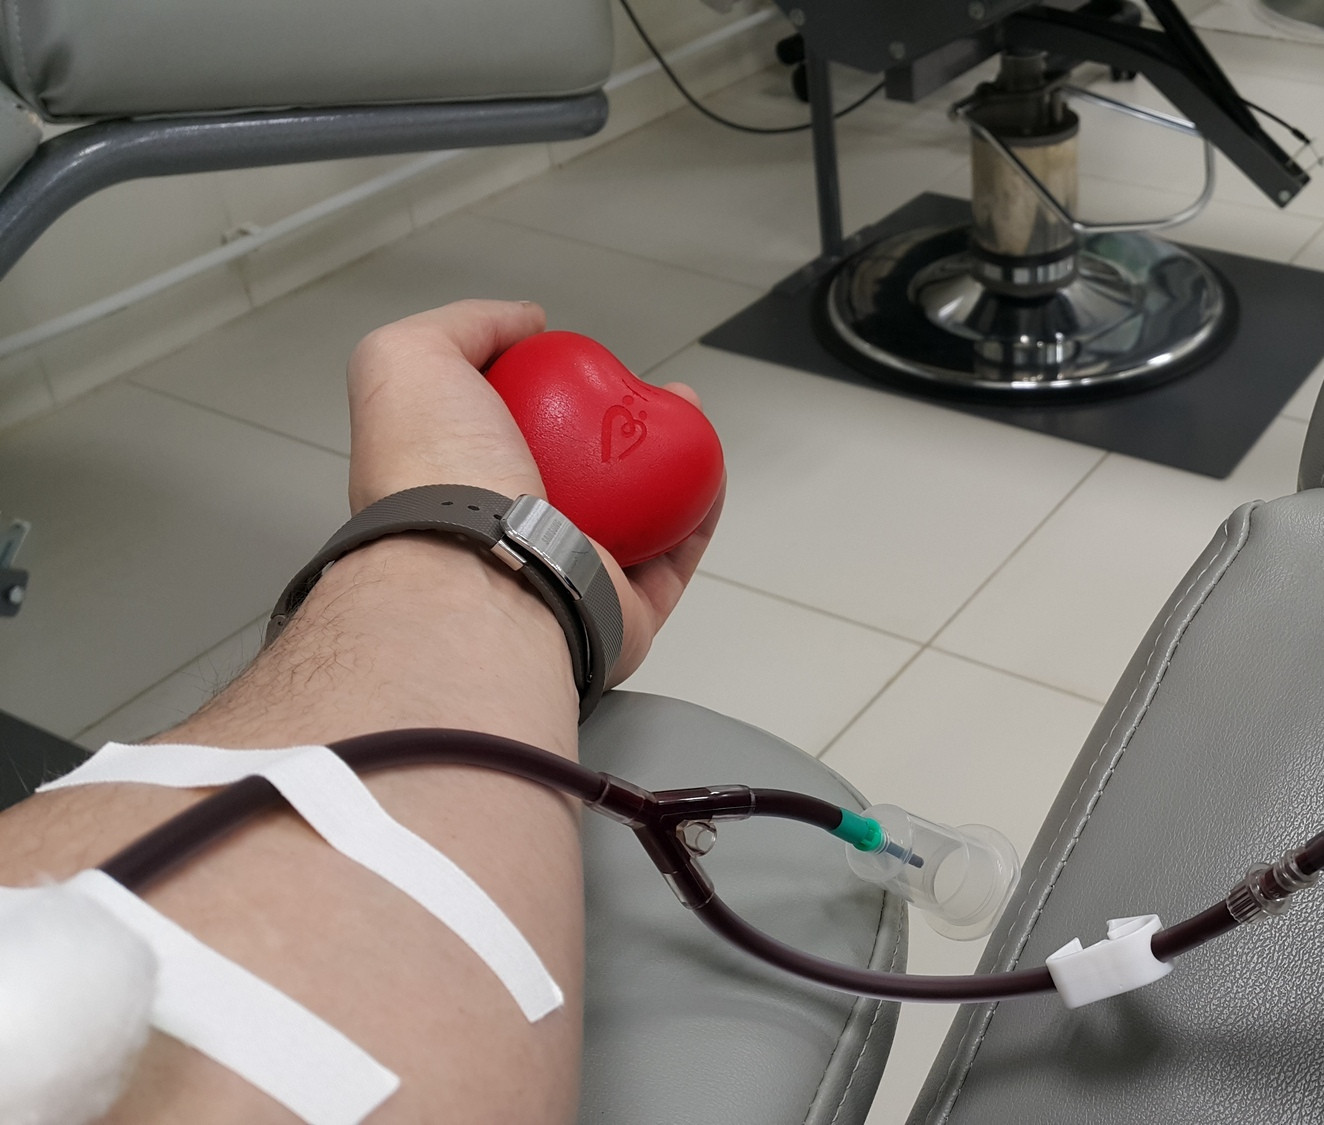 Донор крови платно. Переливание донорской крови. Гемотрансфузия (переливание крови)..